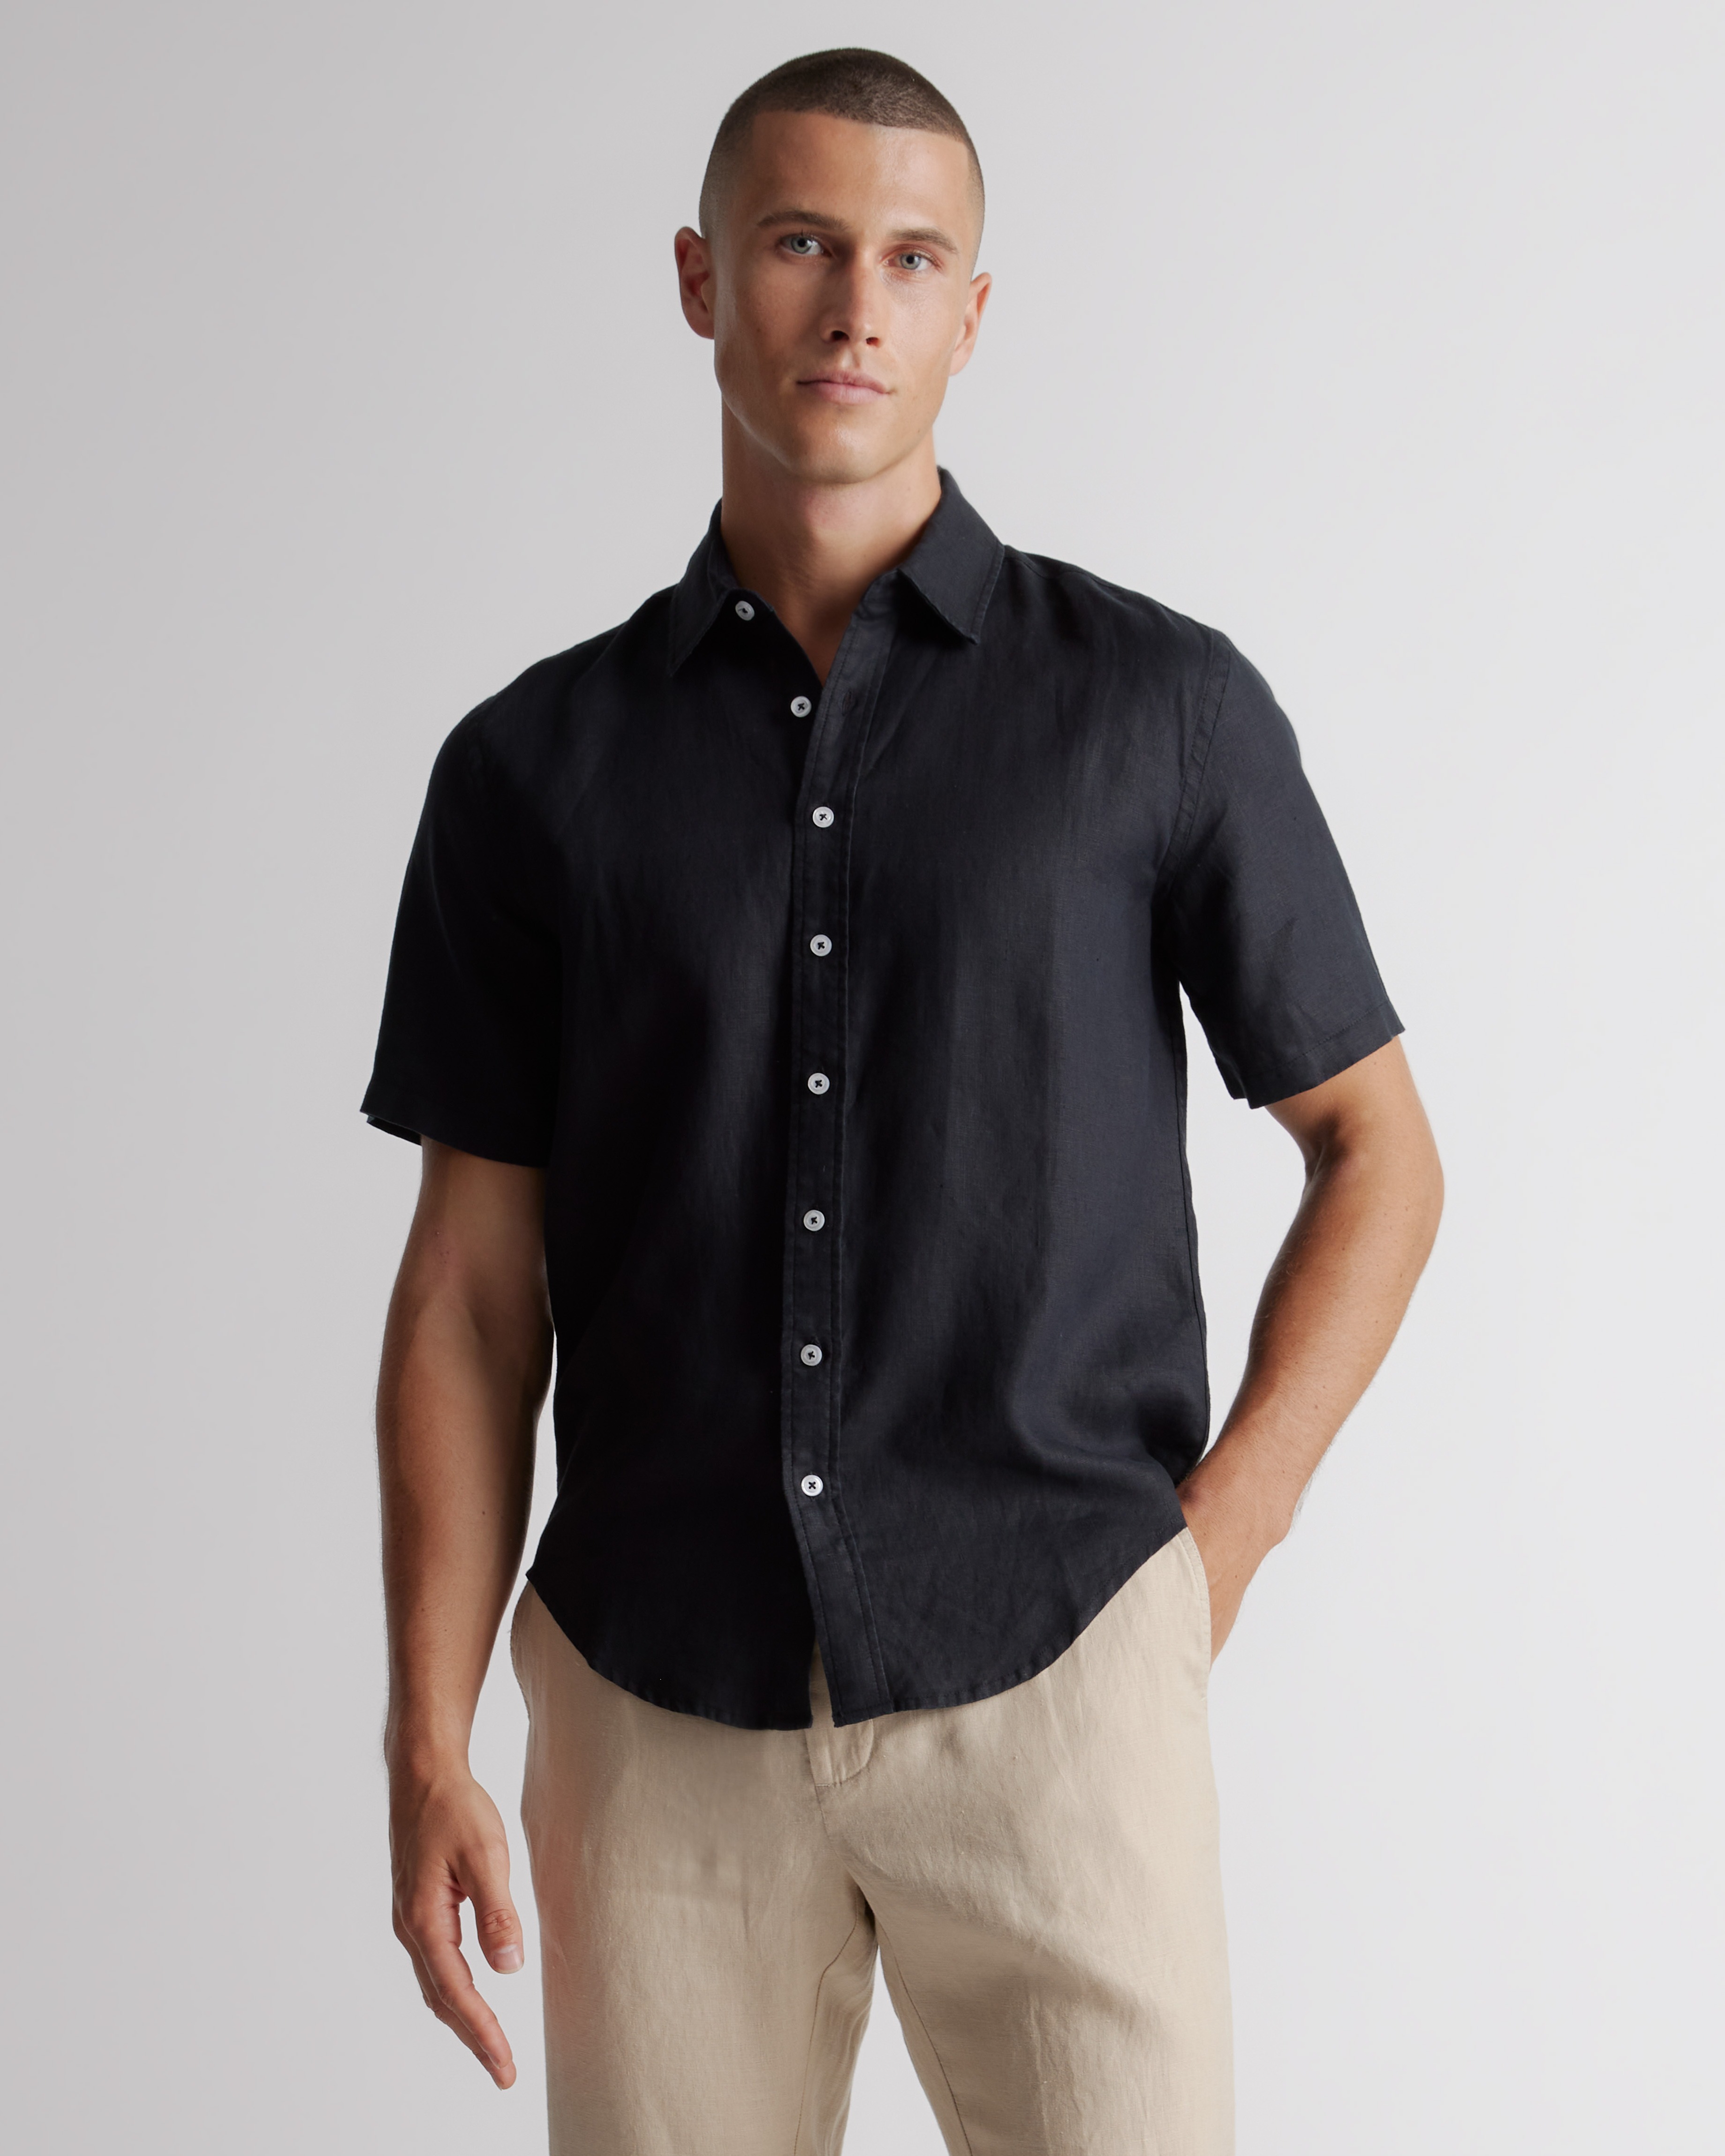 Quince Men's 100% European Linen Short Sleeve Shirt In Black